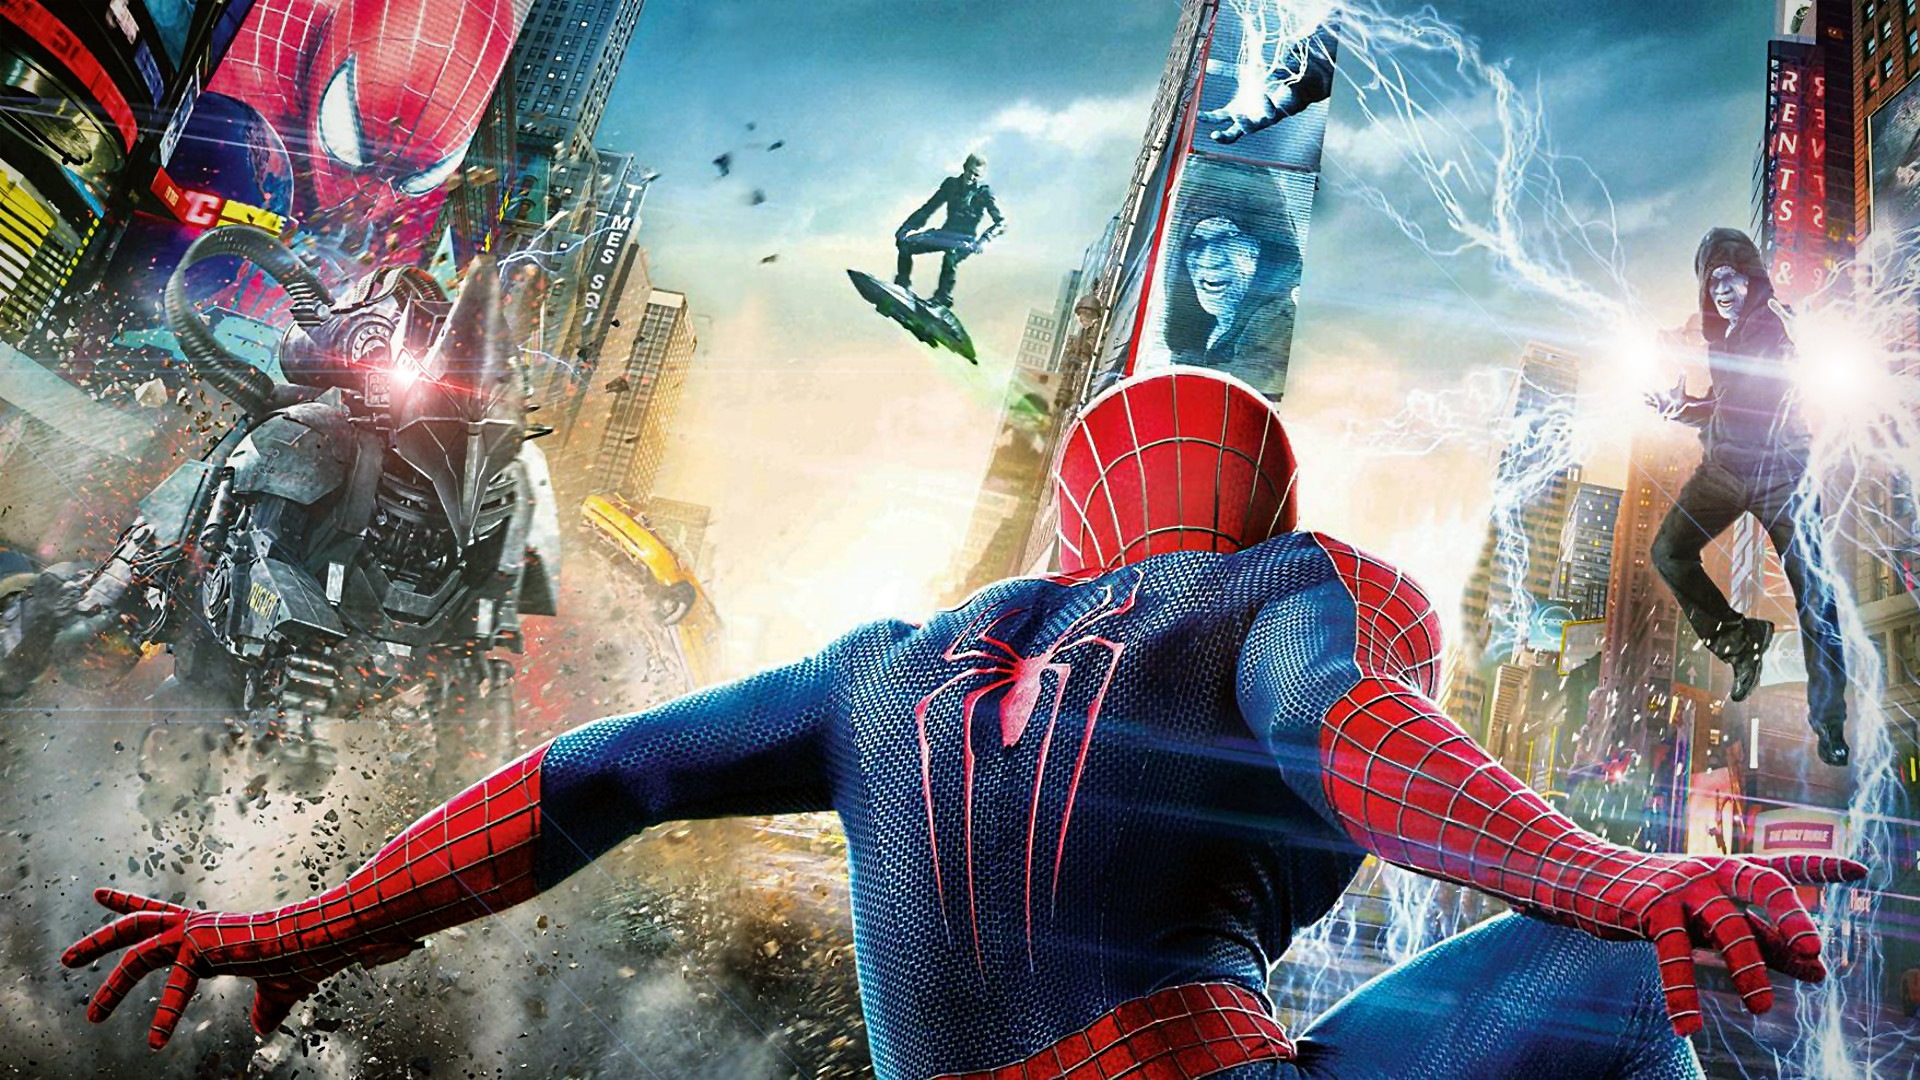 1920x1080 herms85 572 51 The Amazing Spider-Man 2 Movie Poster Wallpaper #2 by  ProfessorAdagio